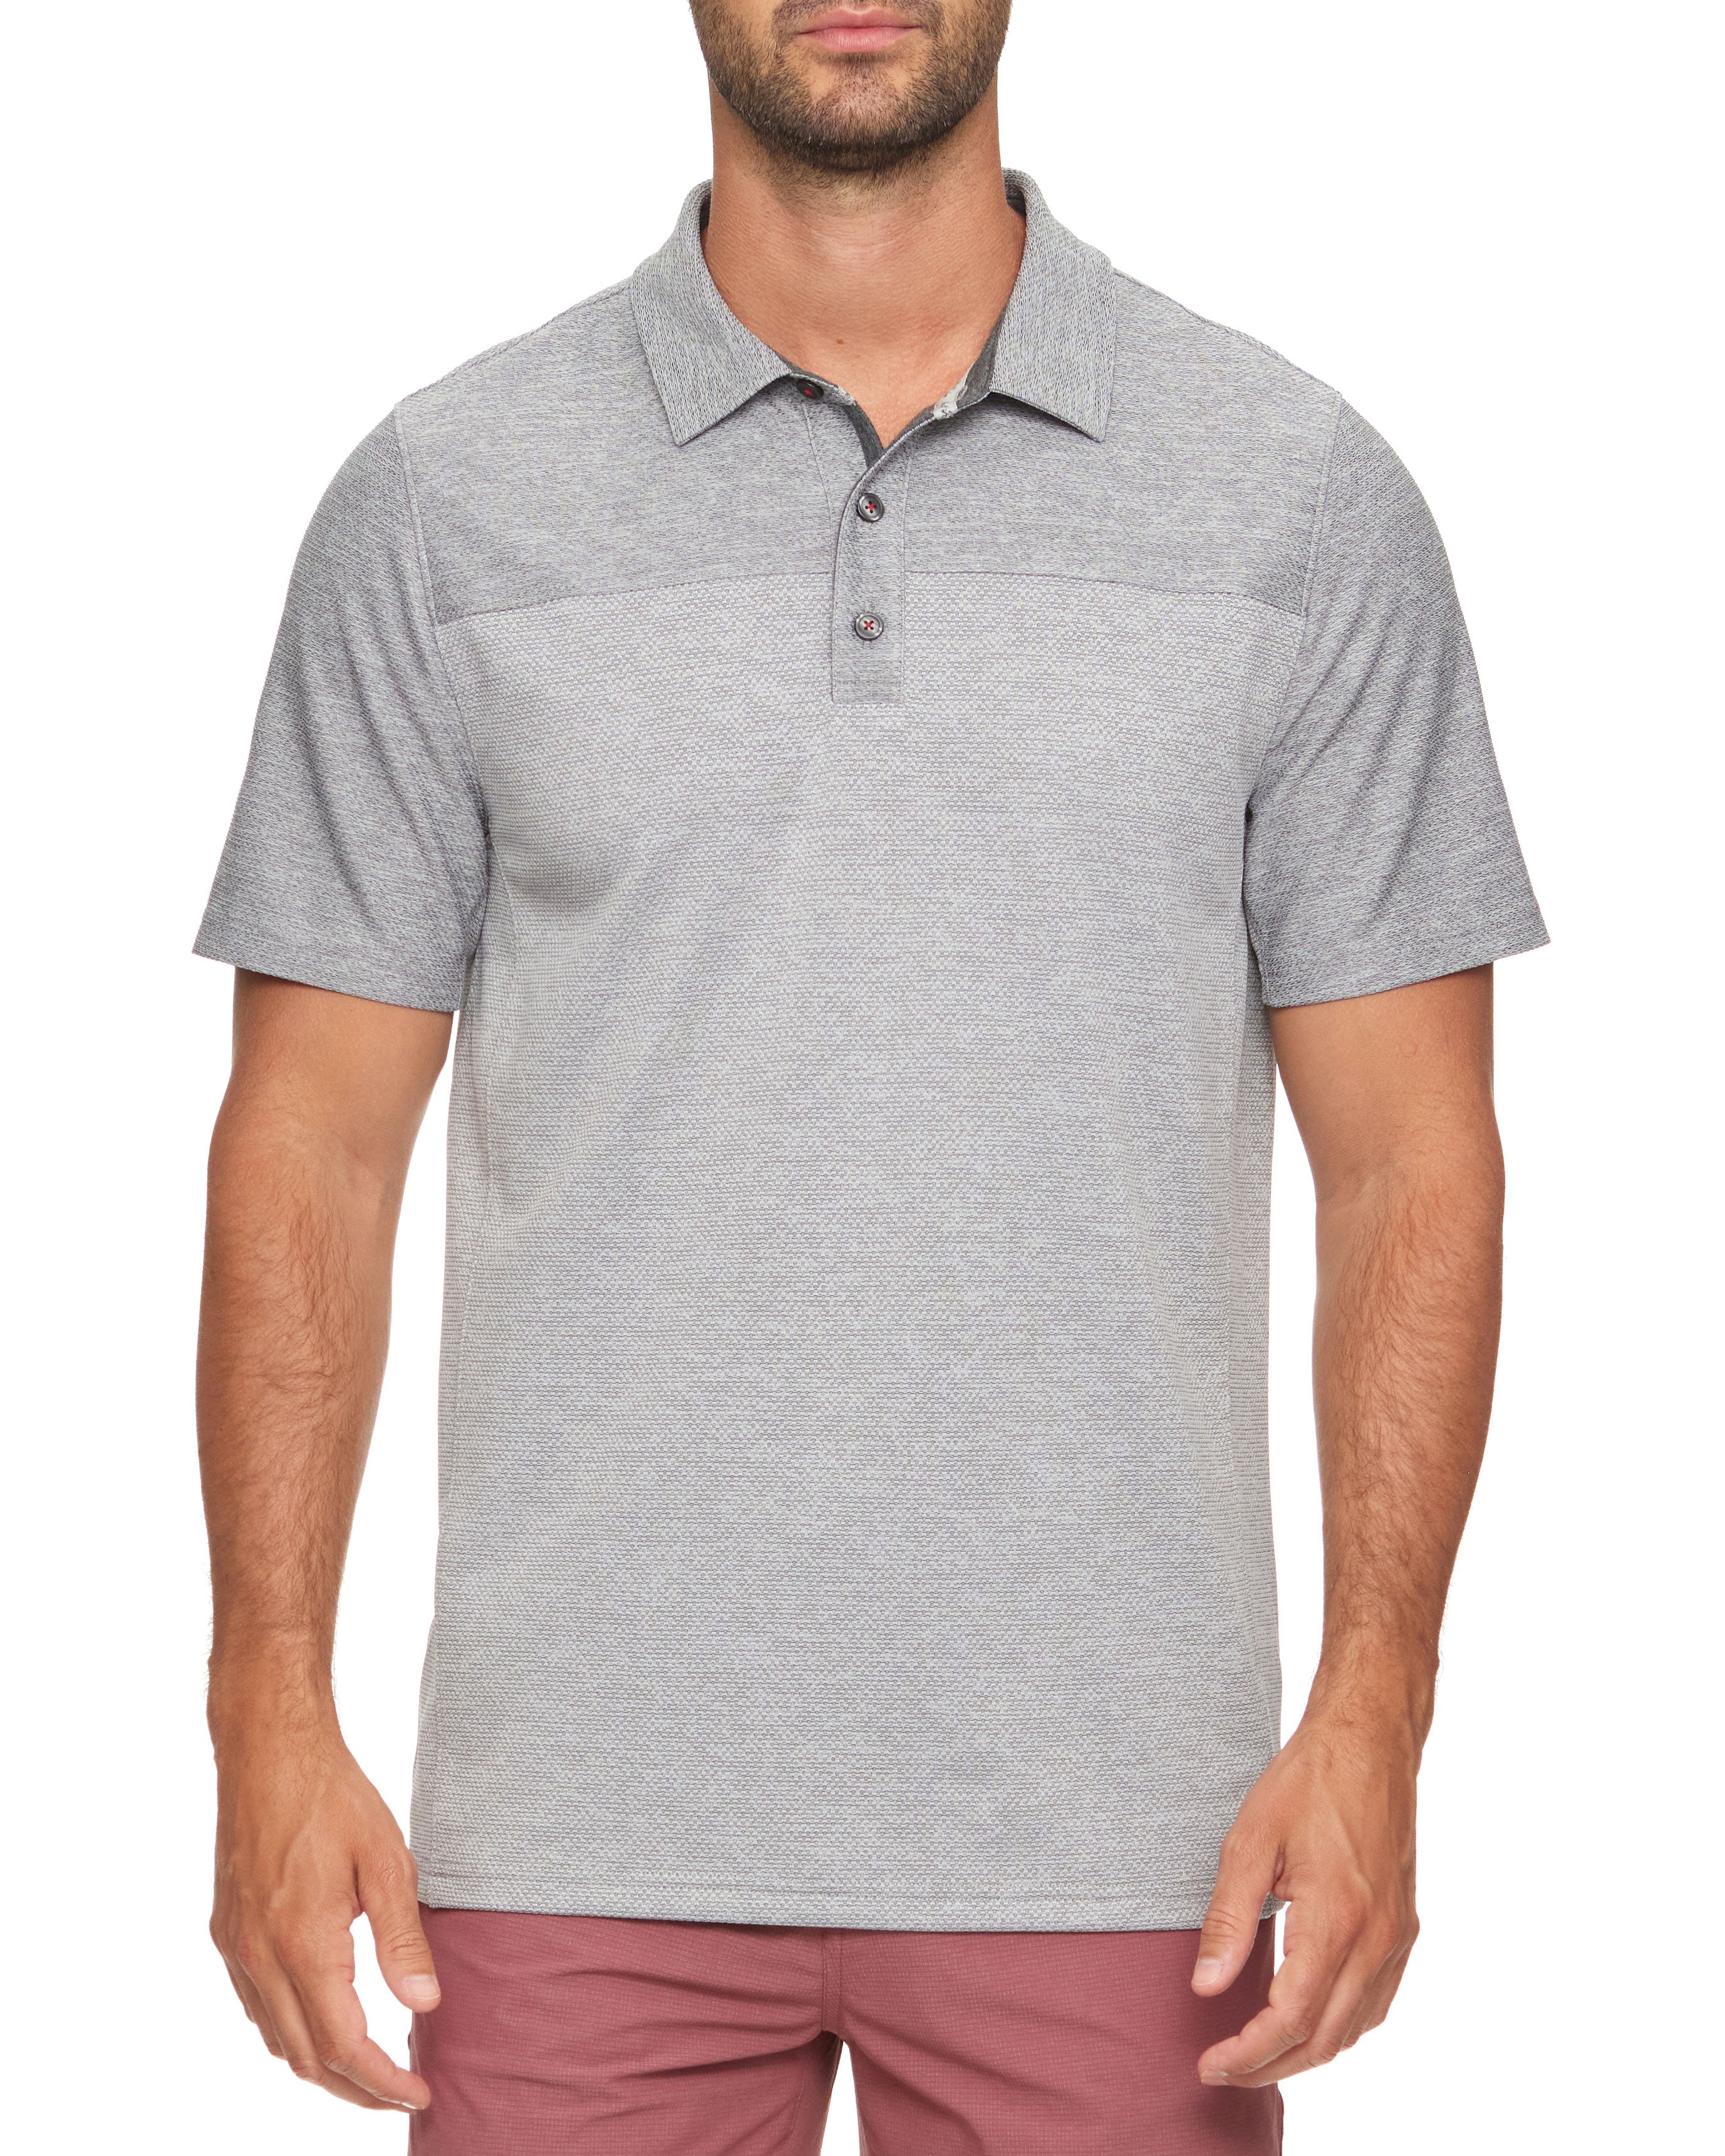 Flag & Anthem Louisville Blocked Polo Shirts in Grey | Men's Regular Size Medium | Polyester | Stitch Fix